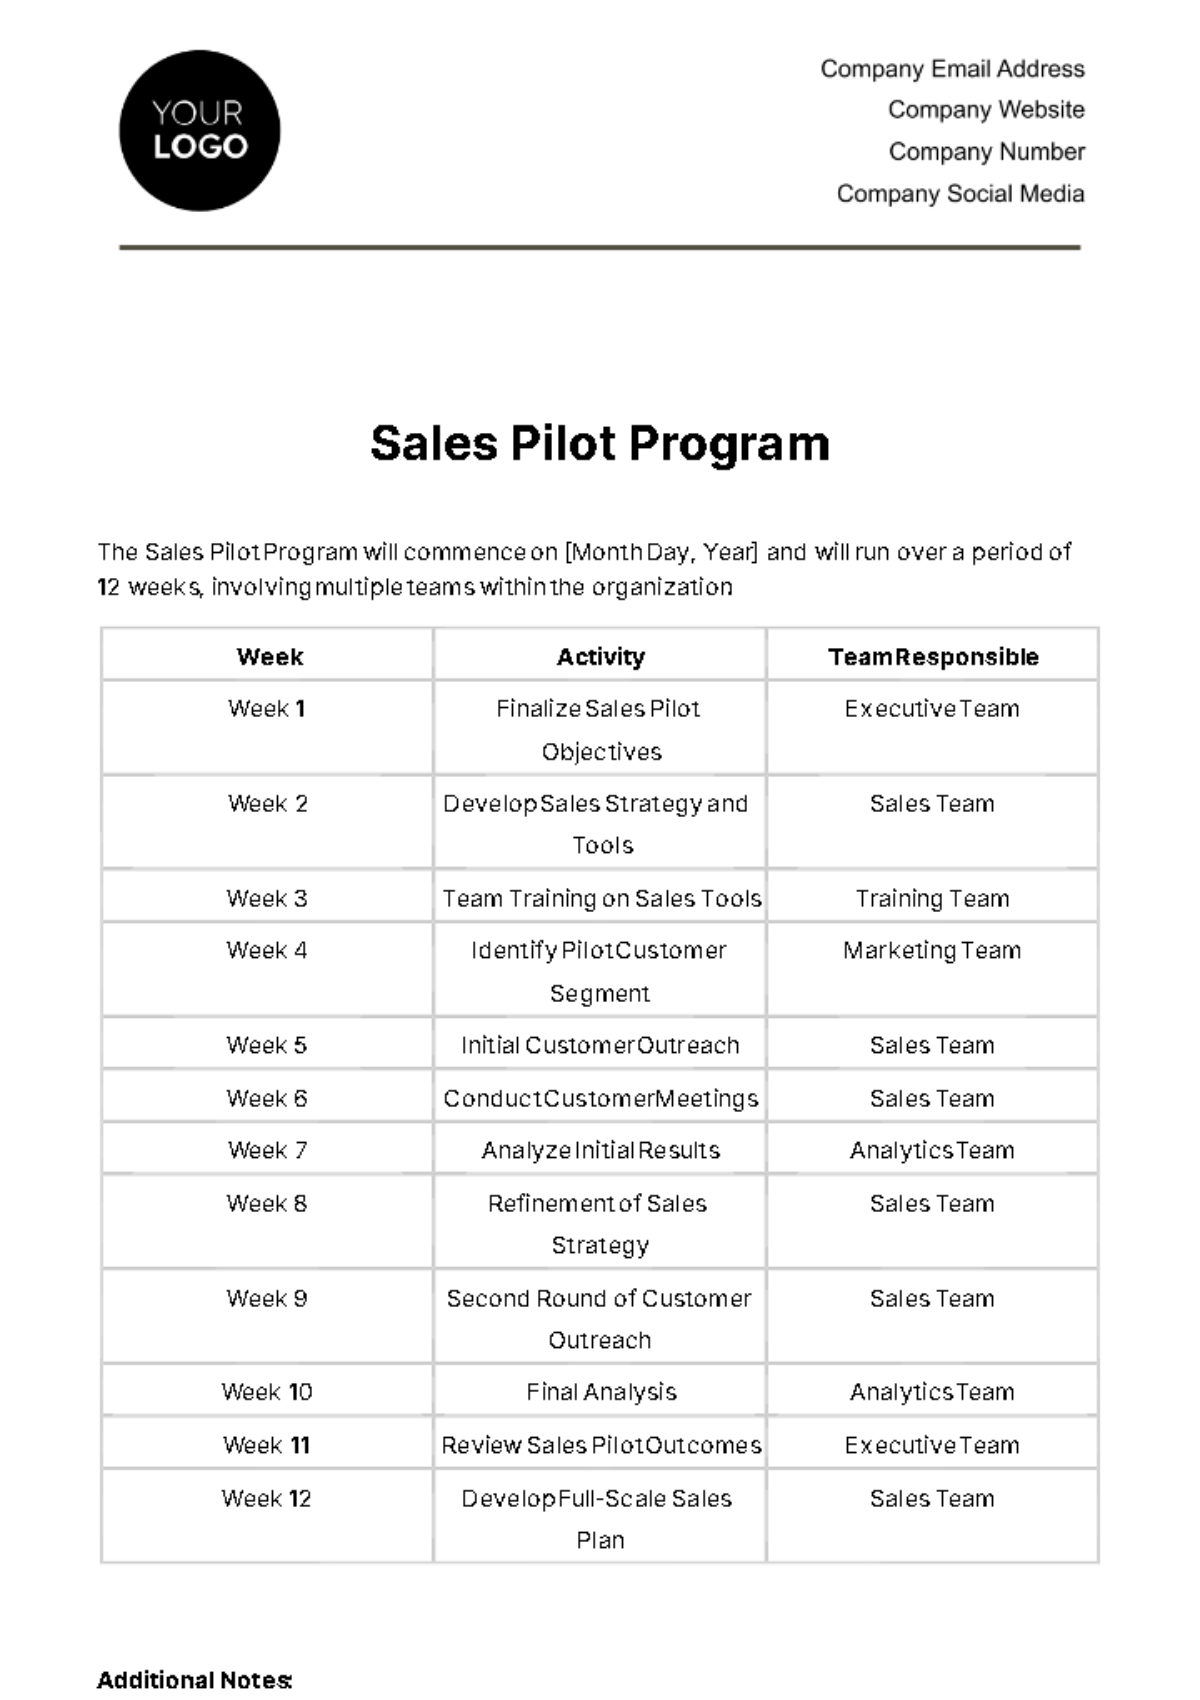 Sales Pilot Program Template